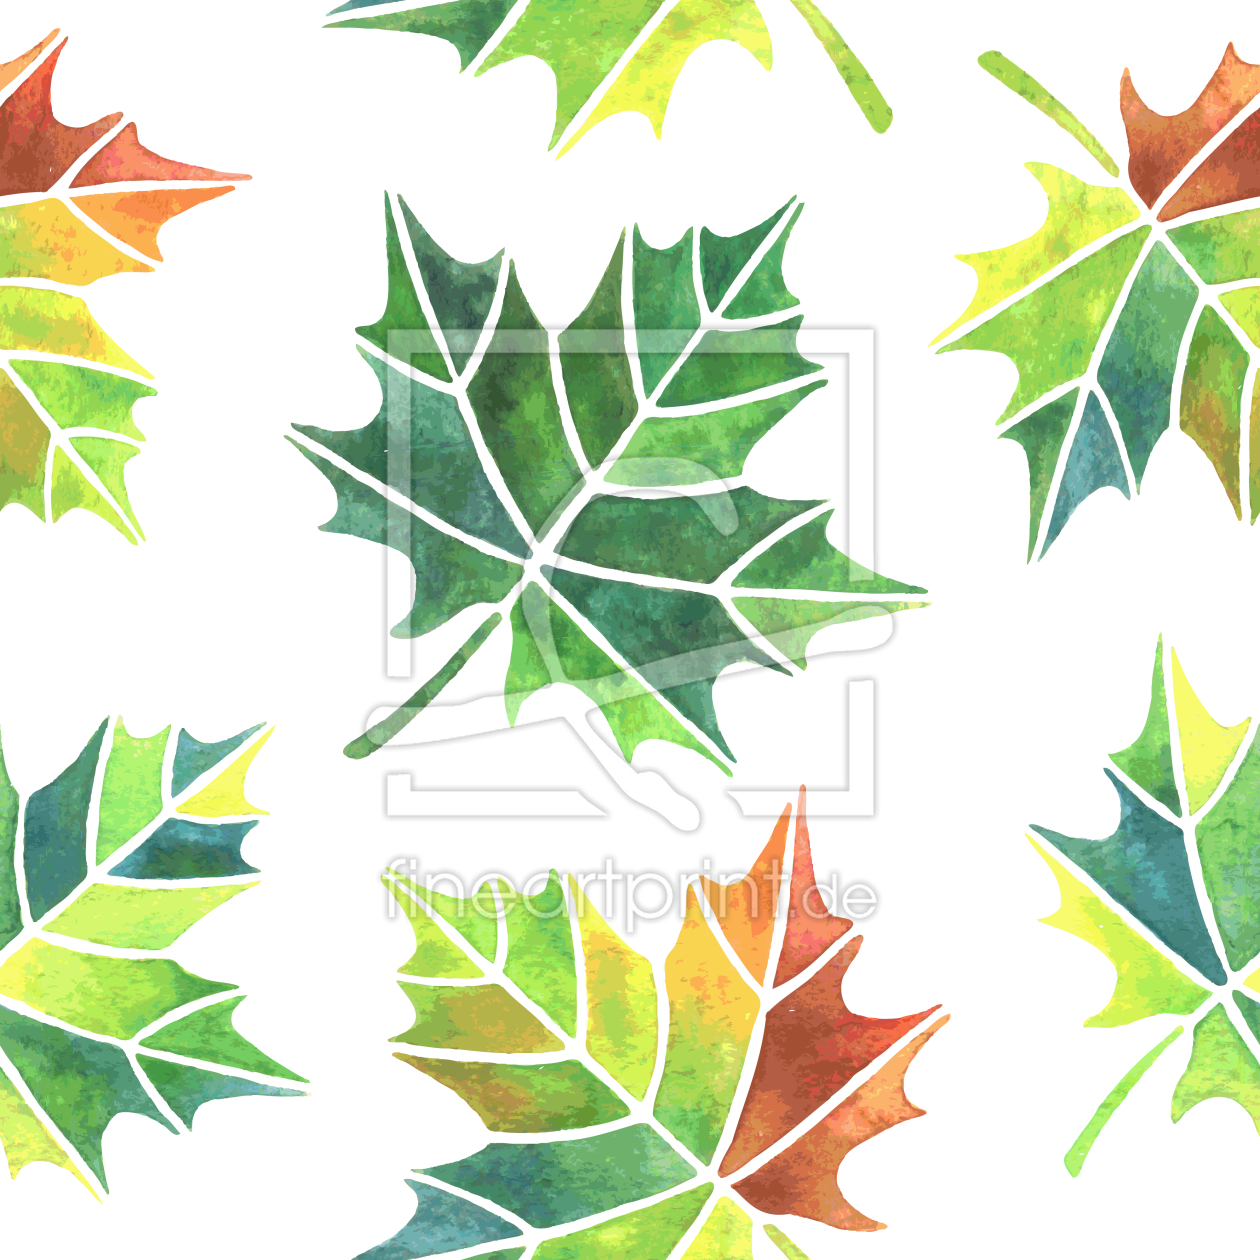 Bild-Nr.: 9006847 Verändernde Blätter erstellt von patterndesigns-com